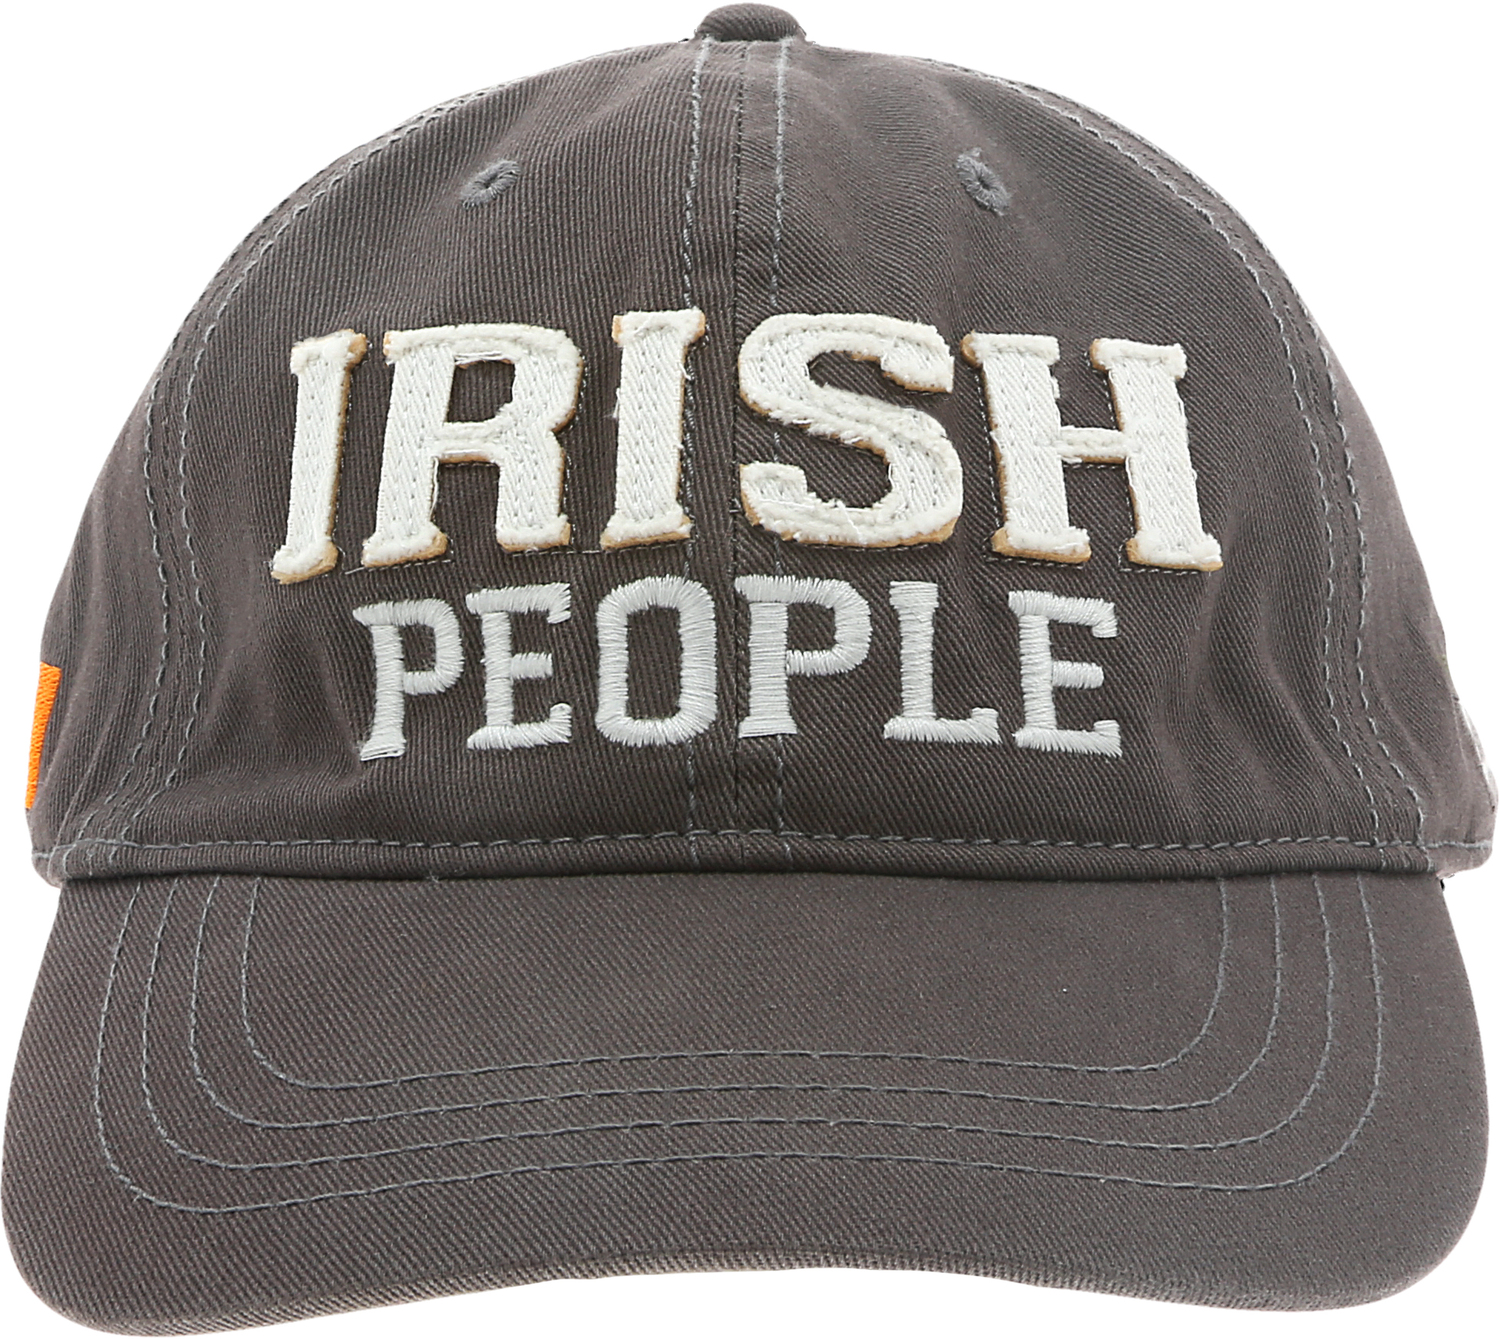 Irish People by We People - Irish People - Dark Gray Adjustable Hat